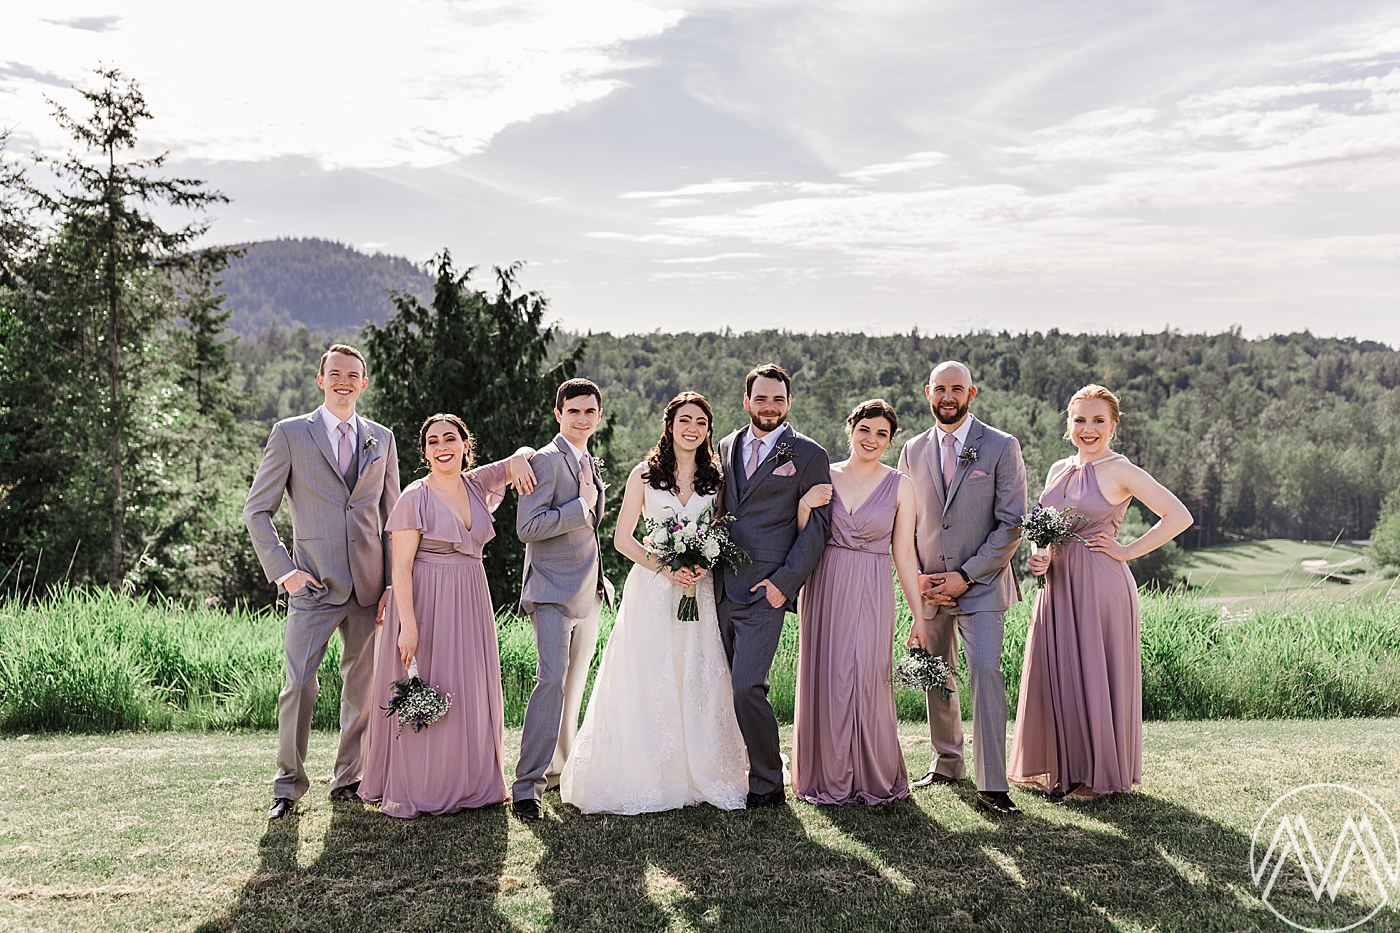 Wedding party photos at Eaglemont Golf Course. Photographed by PNW Wedding Photographer, Megan Montalvo Photography. 